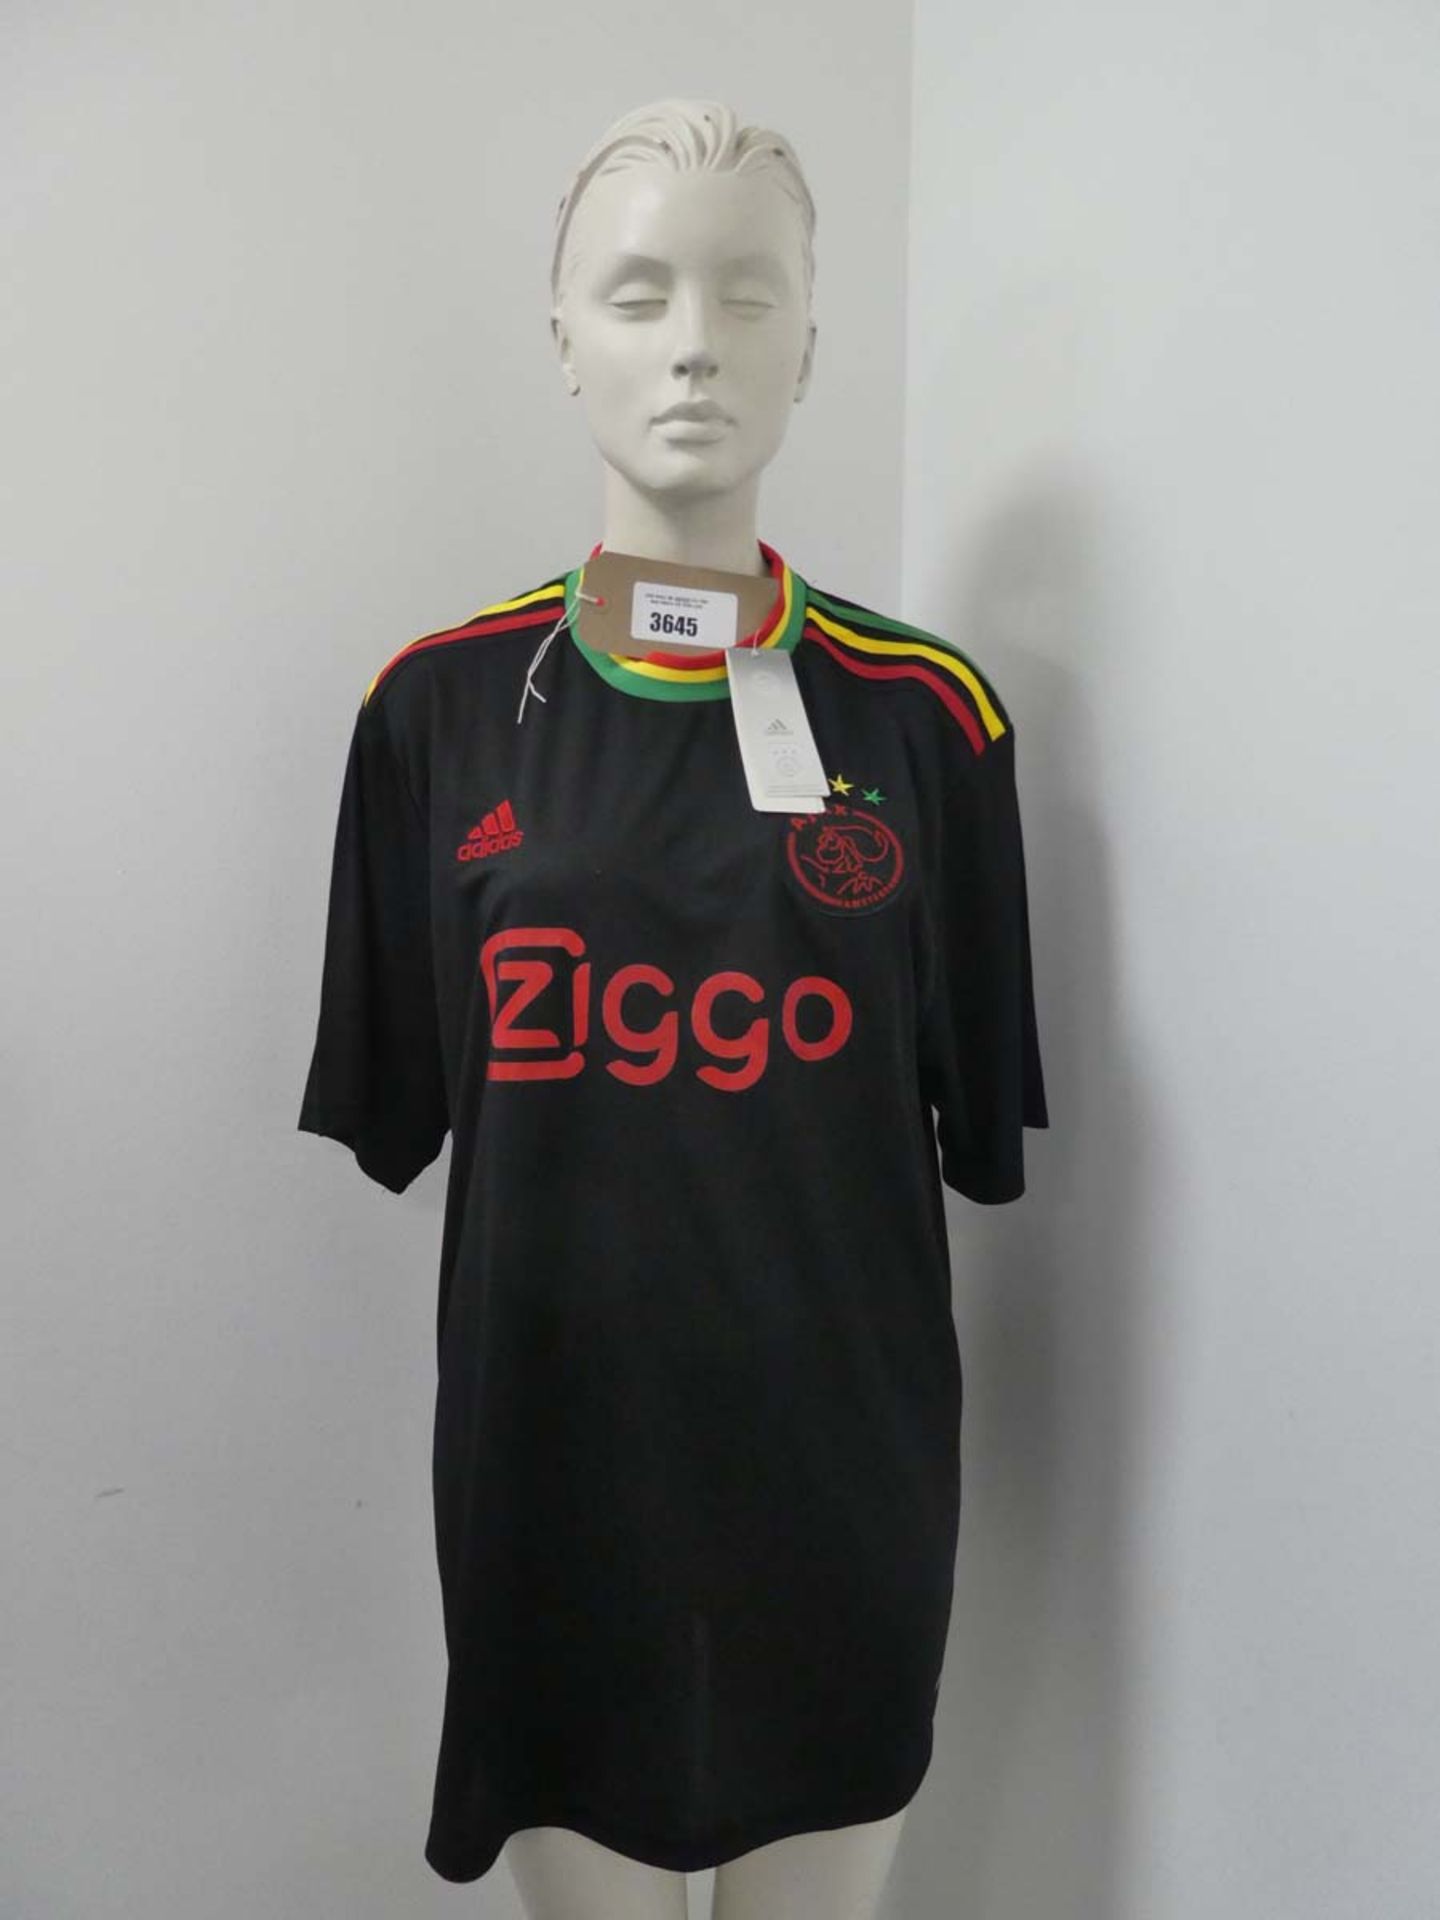 Adidas AJAX Amsterdam jersey in black size 2XL (hanging)